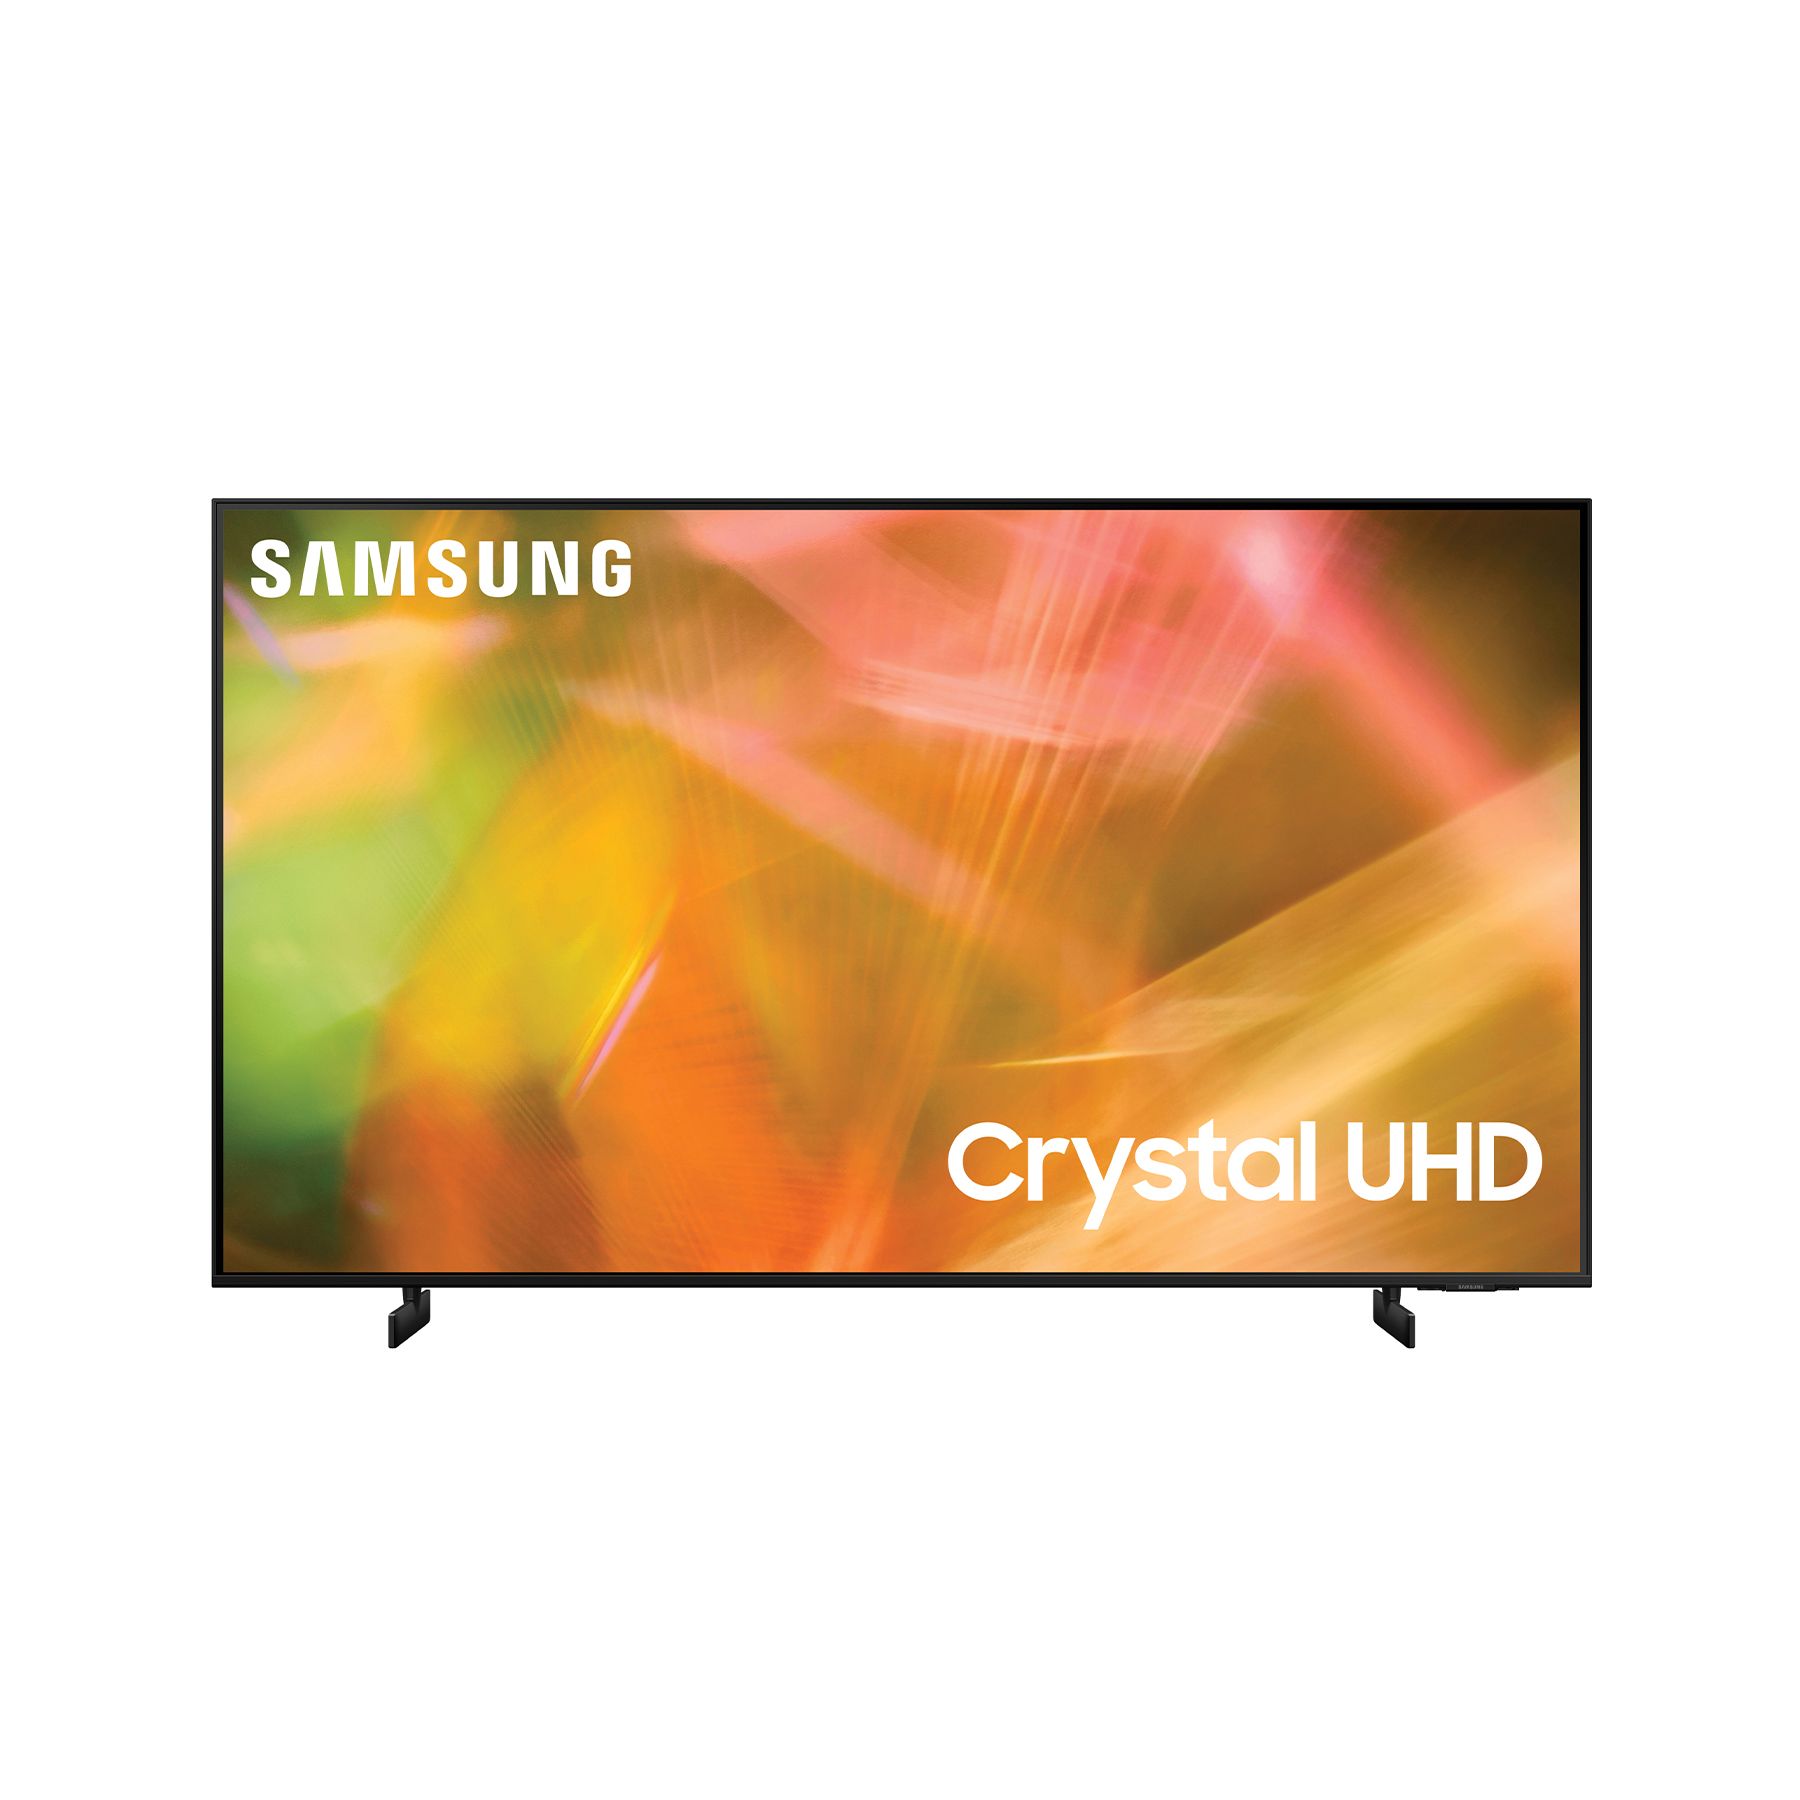 Samsung de 65 pulgadas, clase Crystal UHD, serie AU8000 , 4K, UHD, HDR,  Smart TV, con Alexa incorporada (UN65AU8000FXZA, modelo 2021).